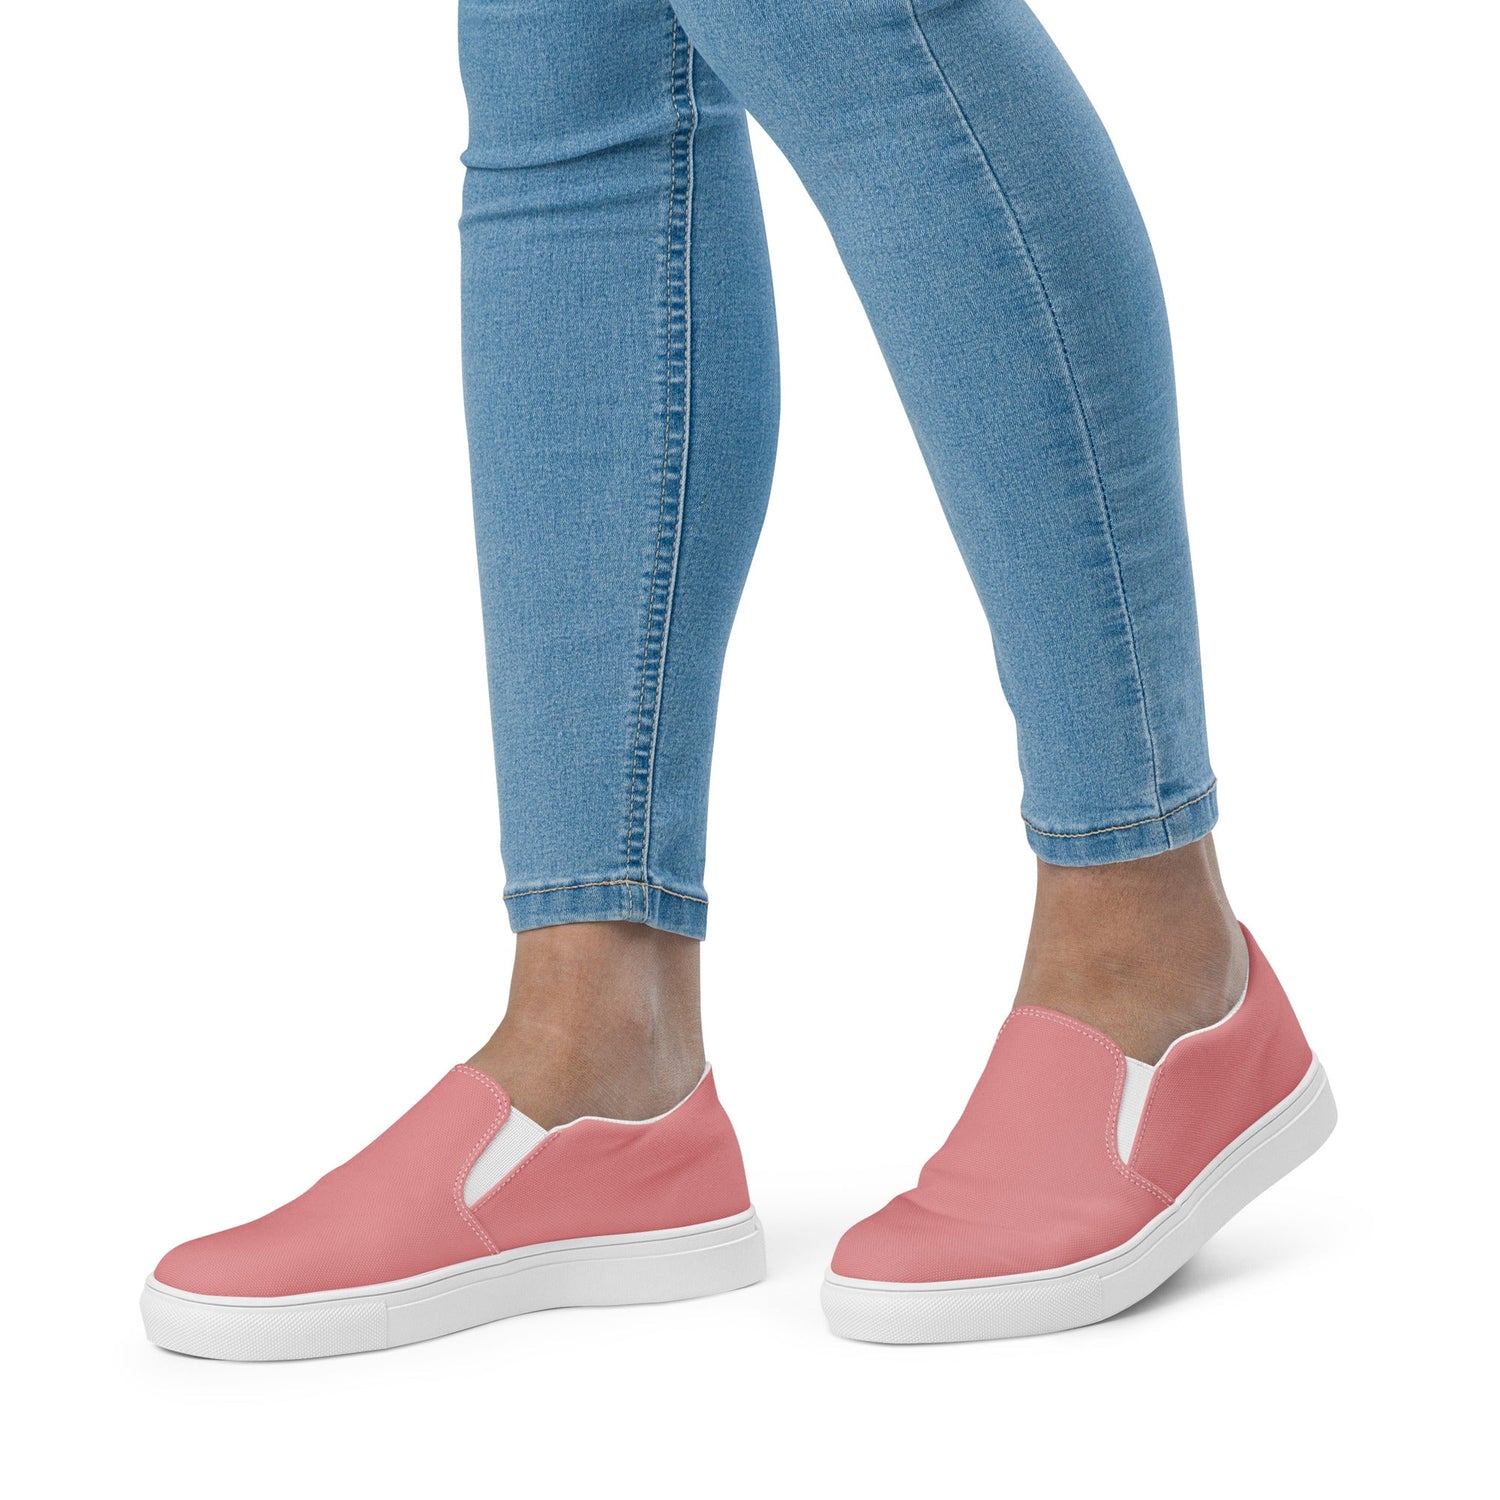 klasneakers Women’s slip-on canvas shoes - Pink